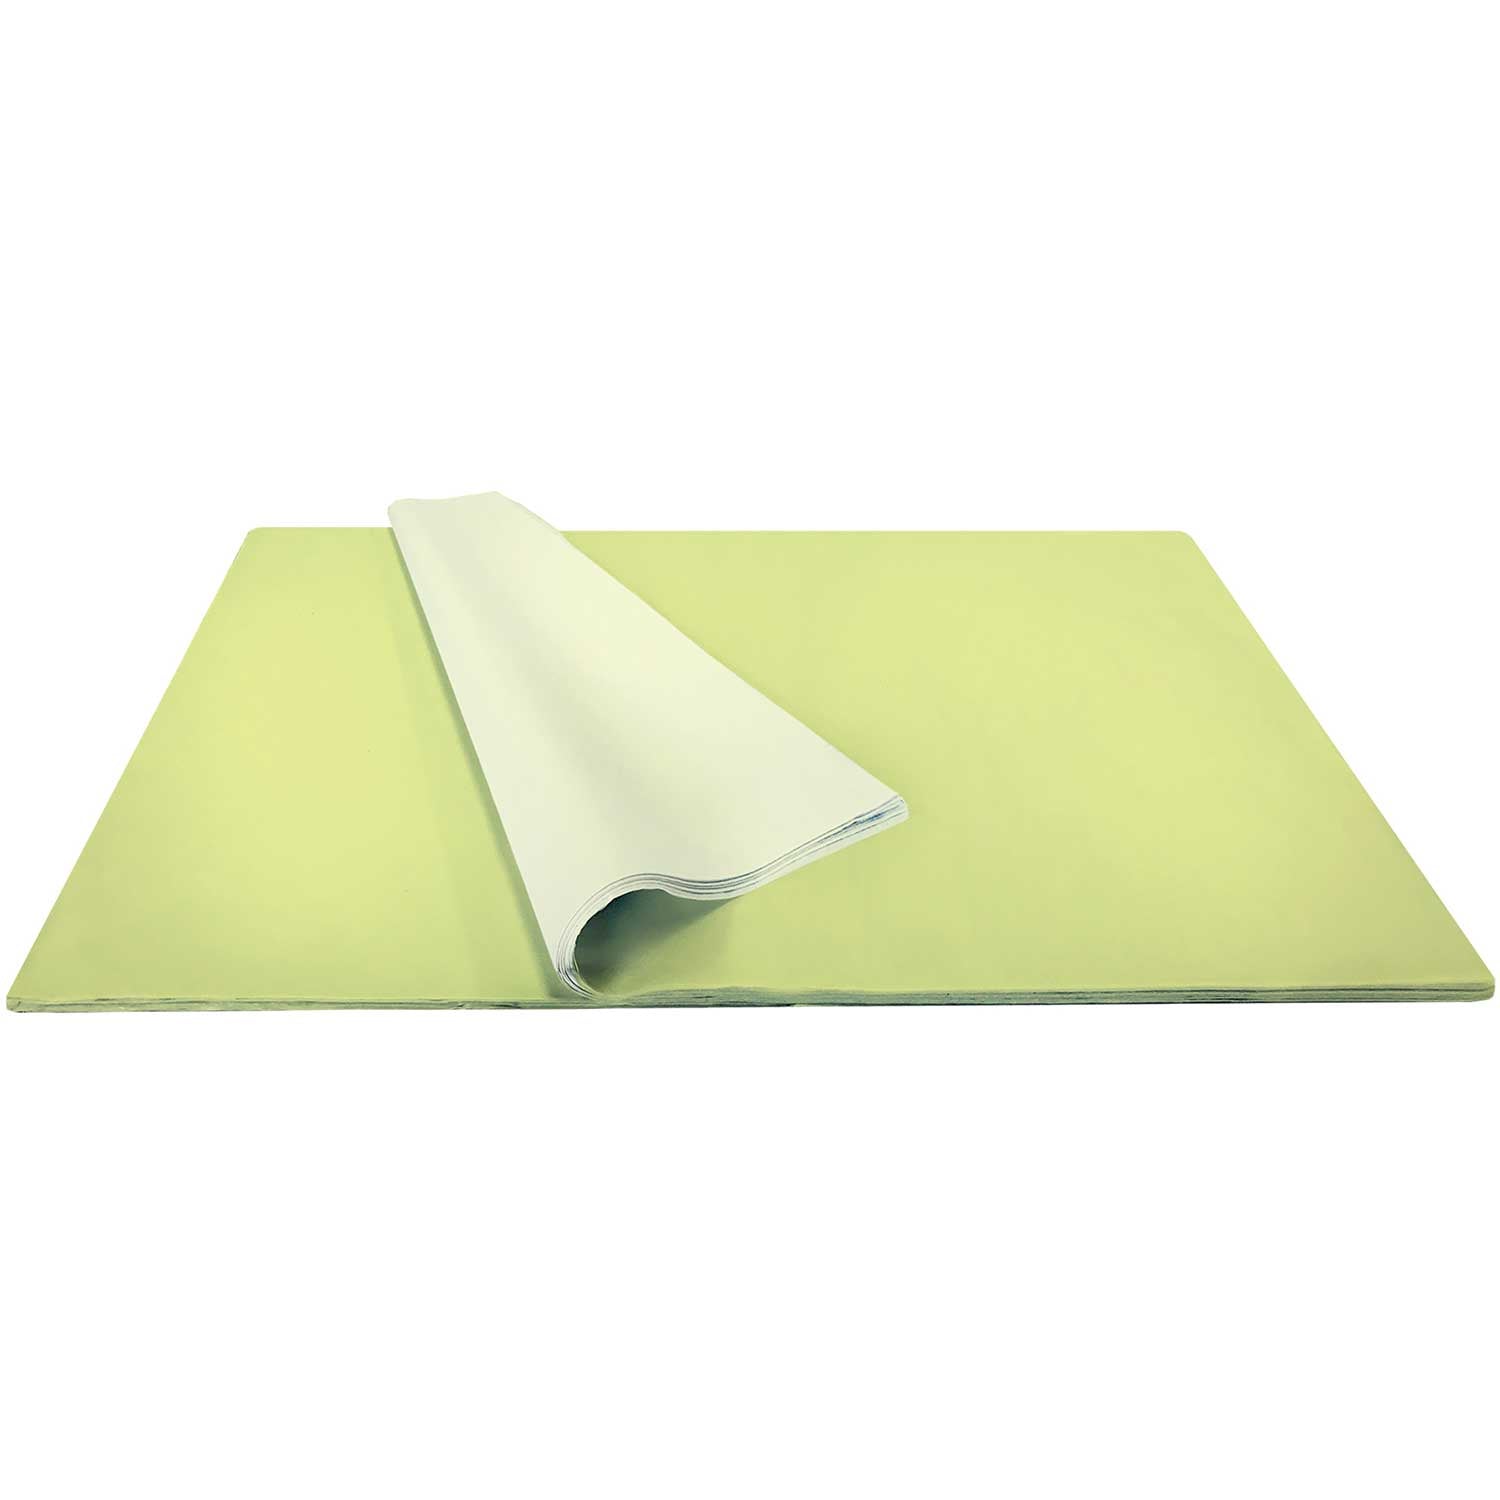 Light Yellow Wrapping Tissue Paper Set - FiveSeasonStuff